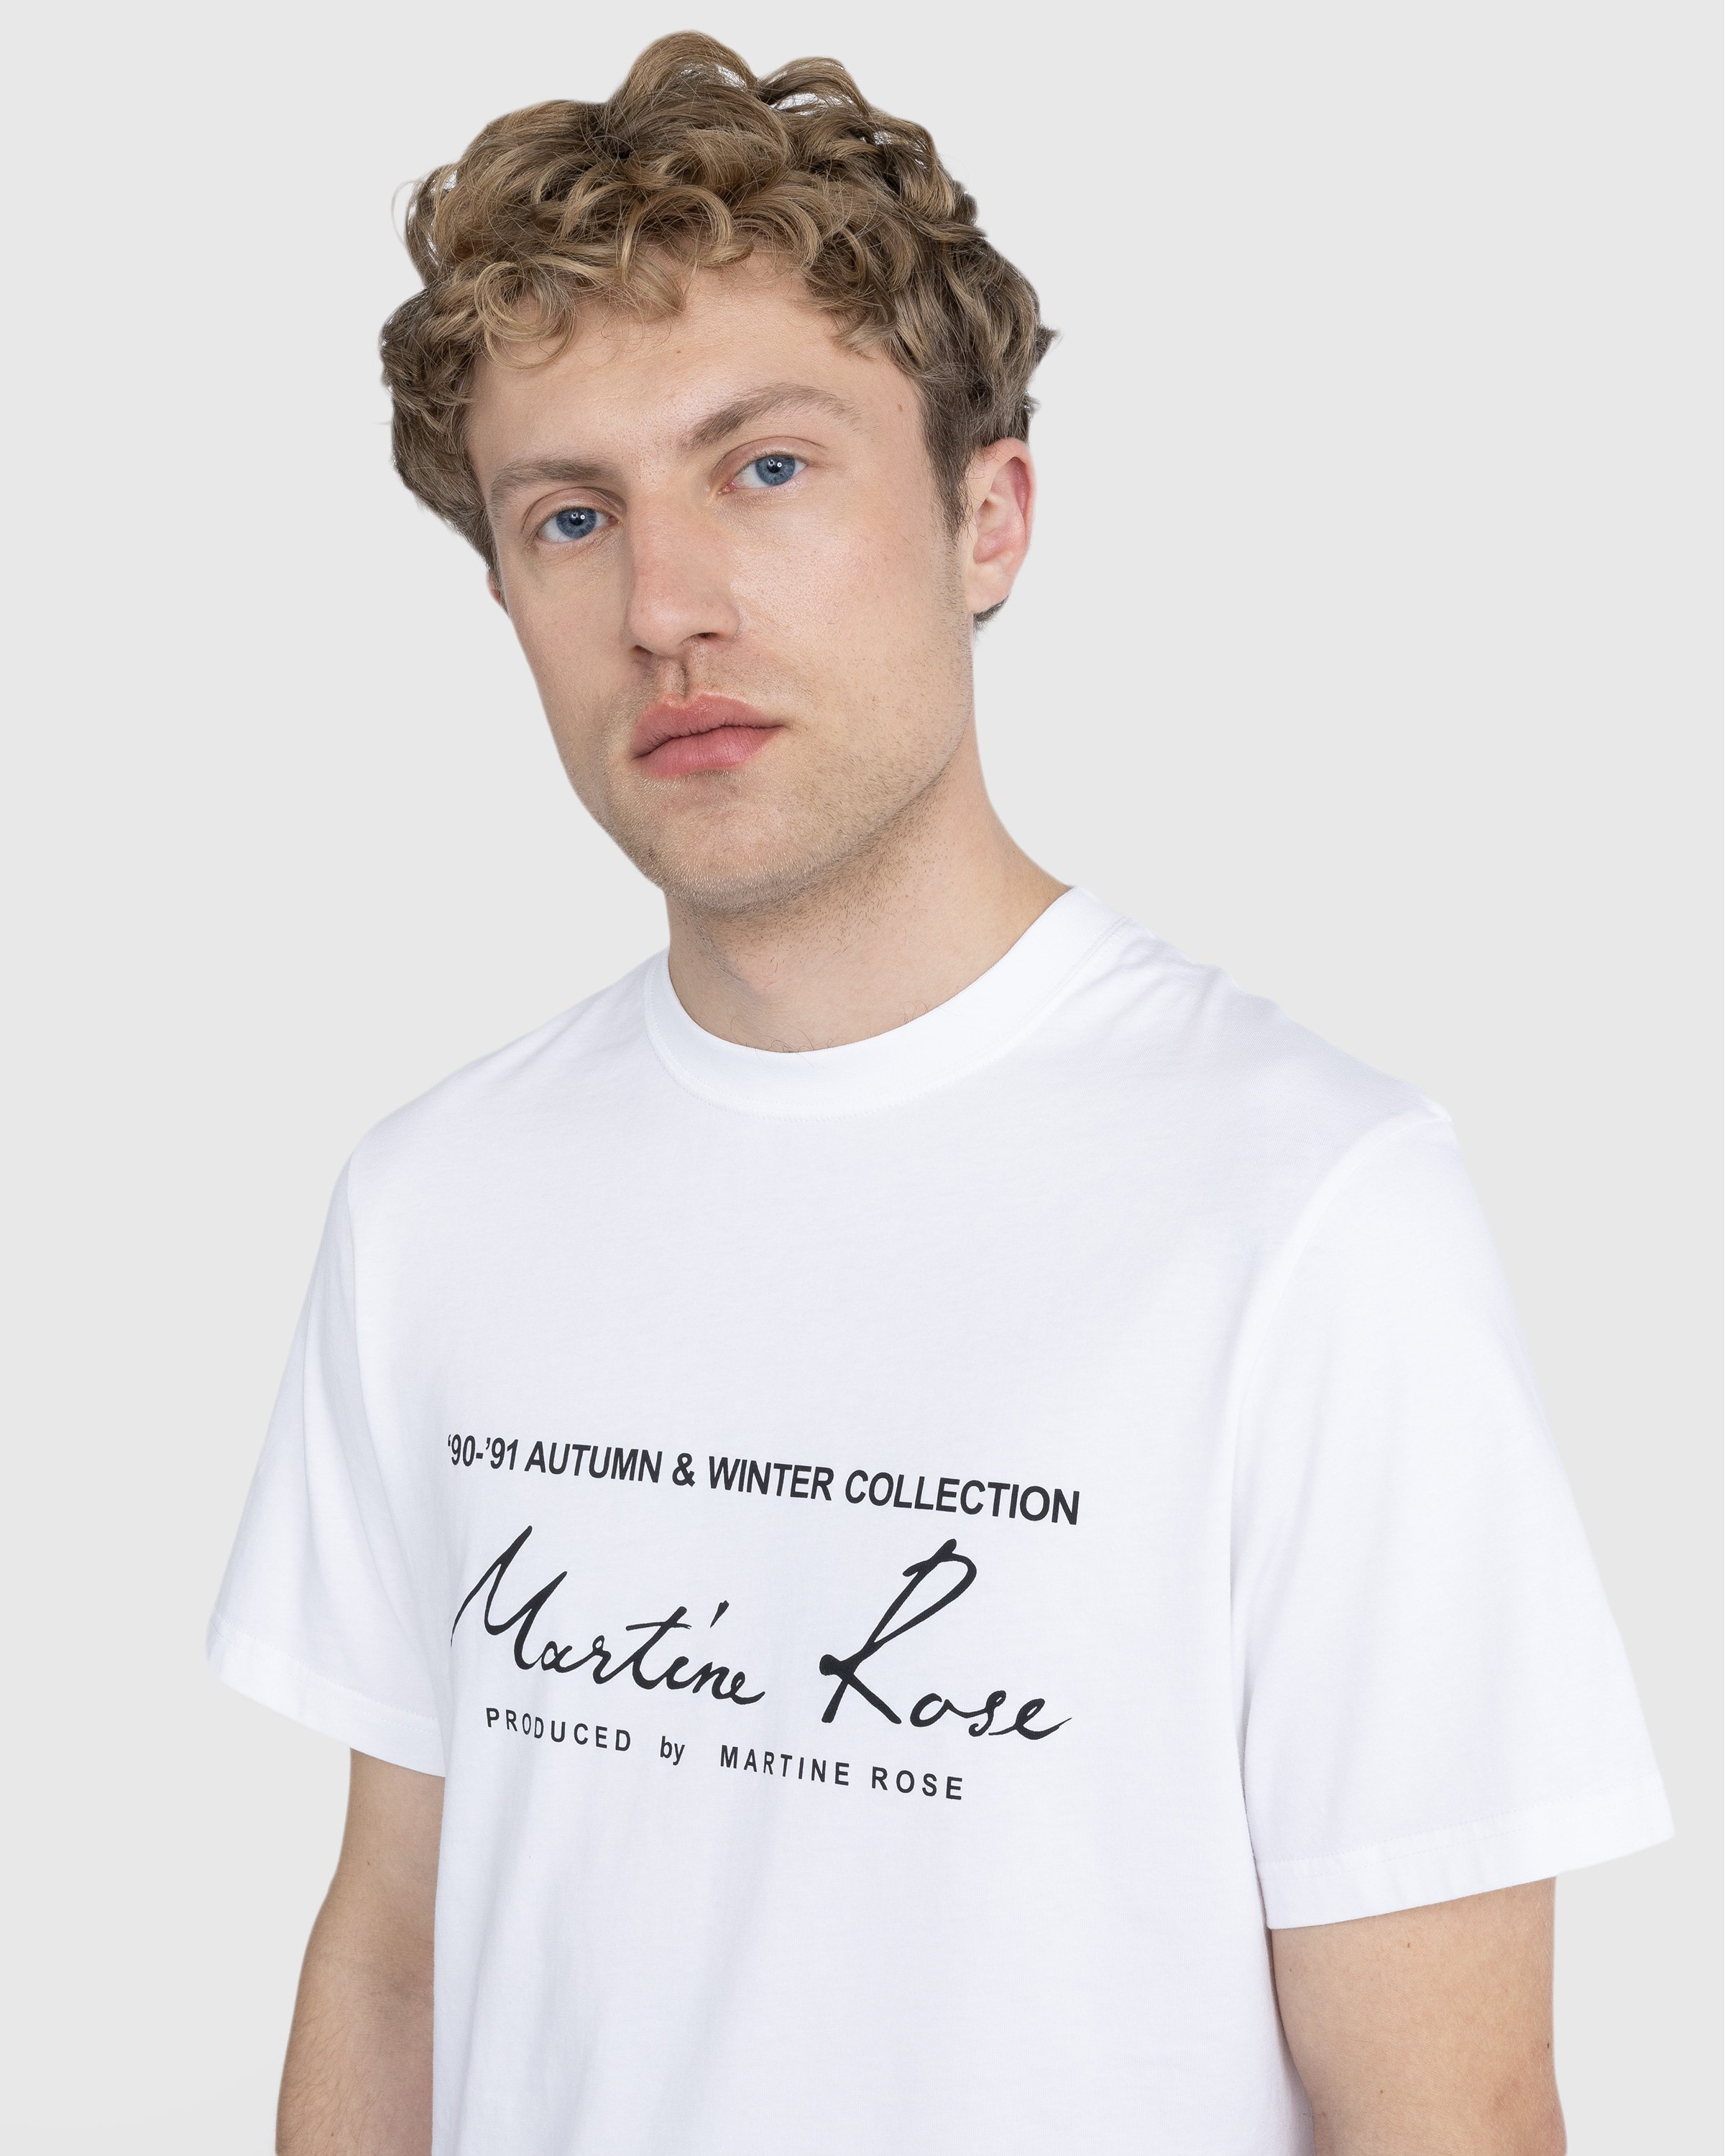 Martine Rose - Classic S/S T-Shirt White - Clothing - White - Image 5